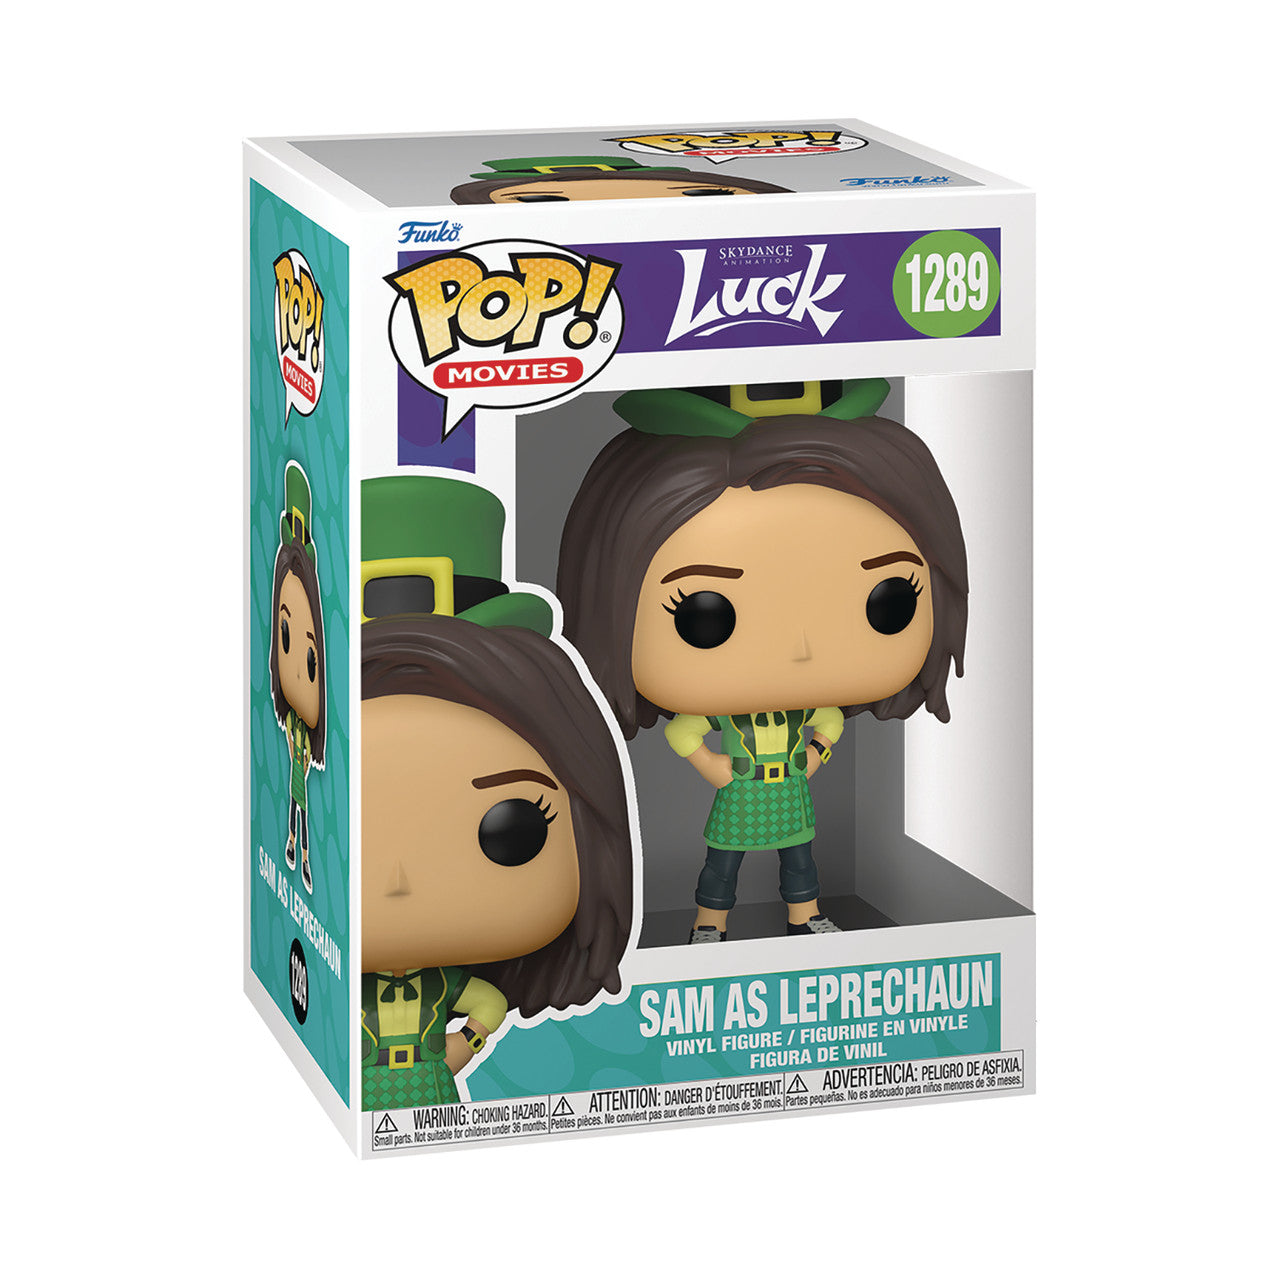 Funko Pop! Movies Luck - Sam as Leprechaun #1289